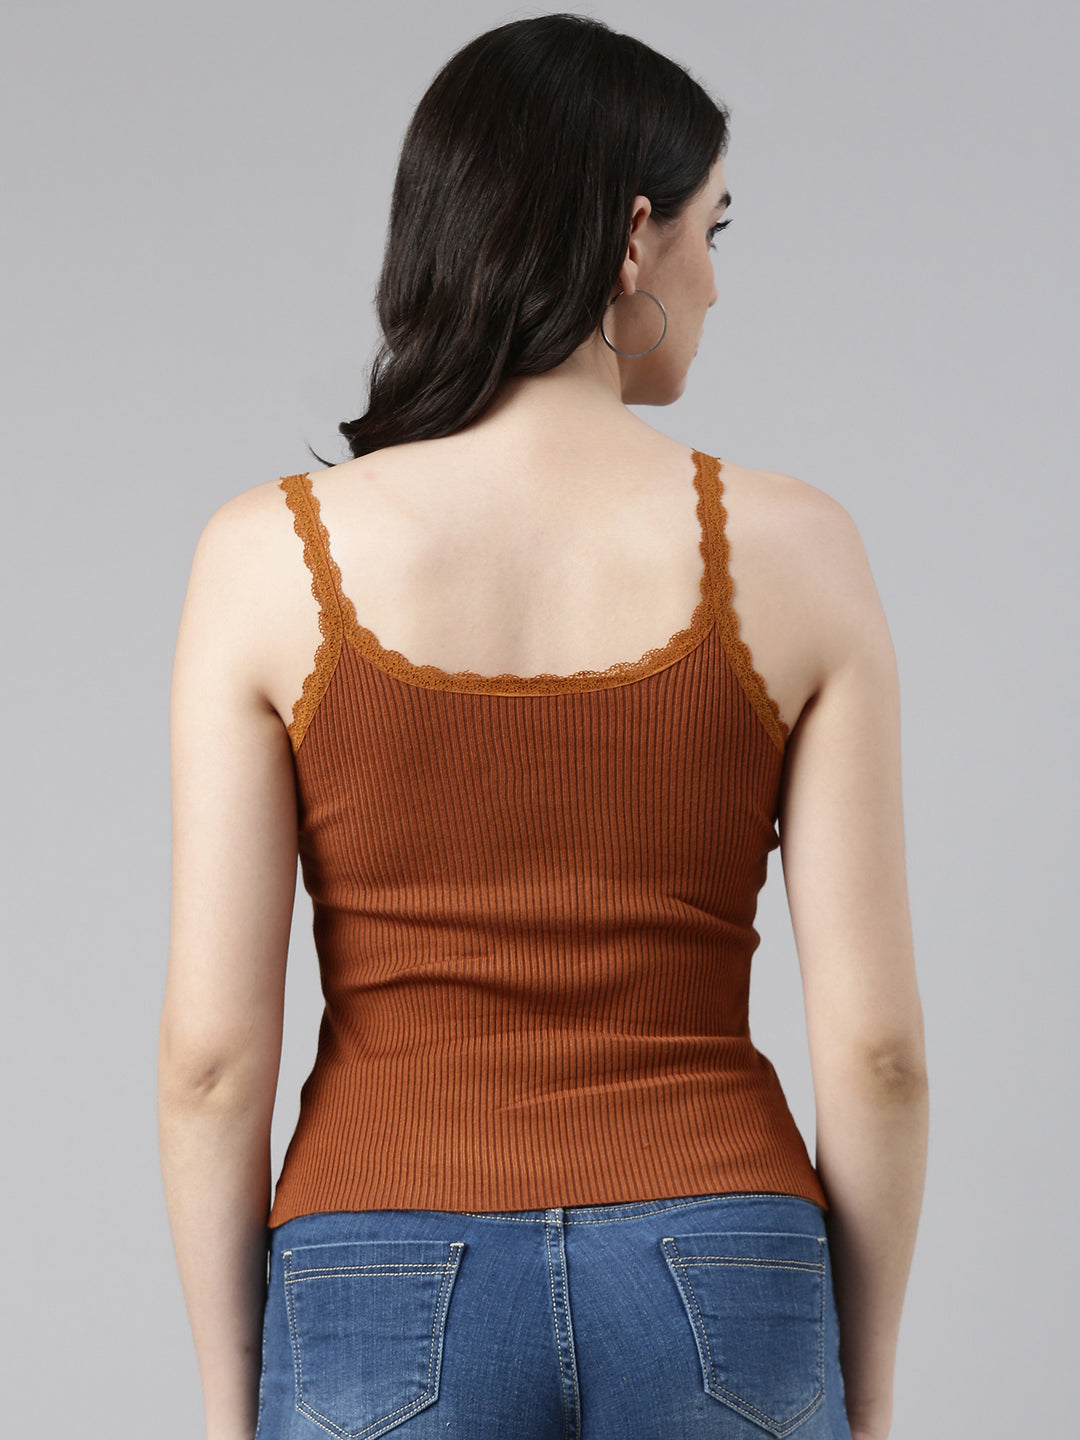 Women Shoulder Straps Solid Brown Top